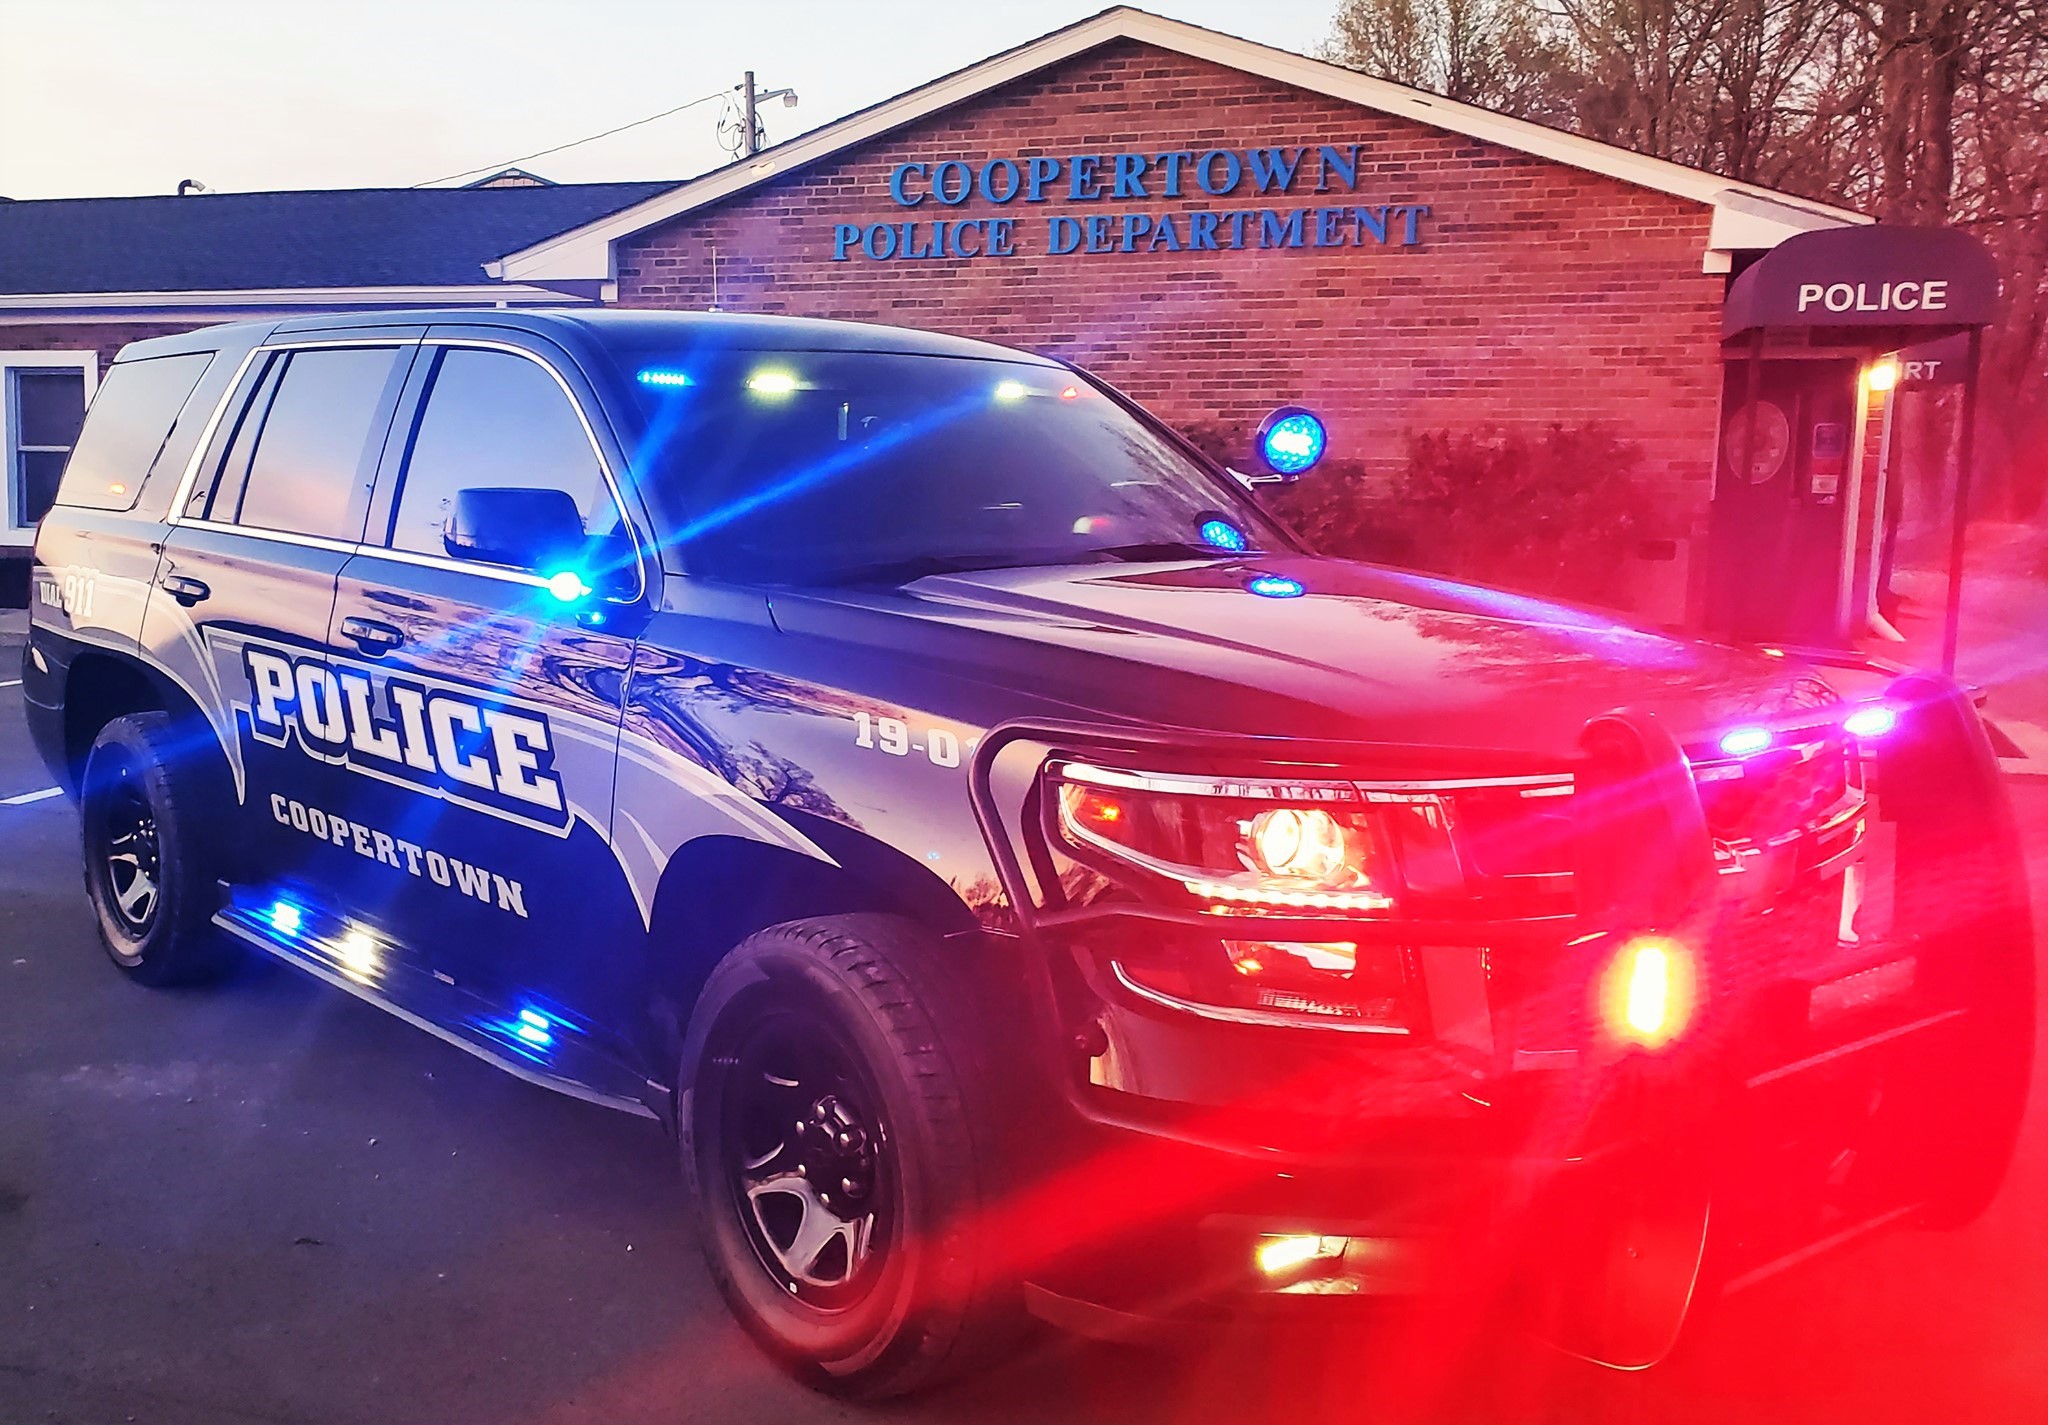 Coopertown Police Department